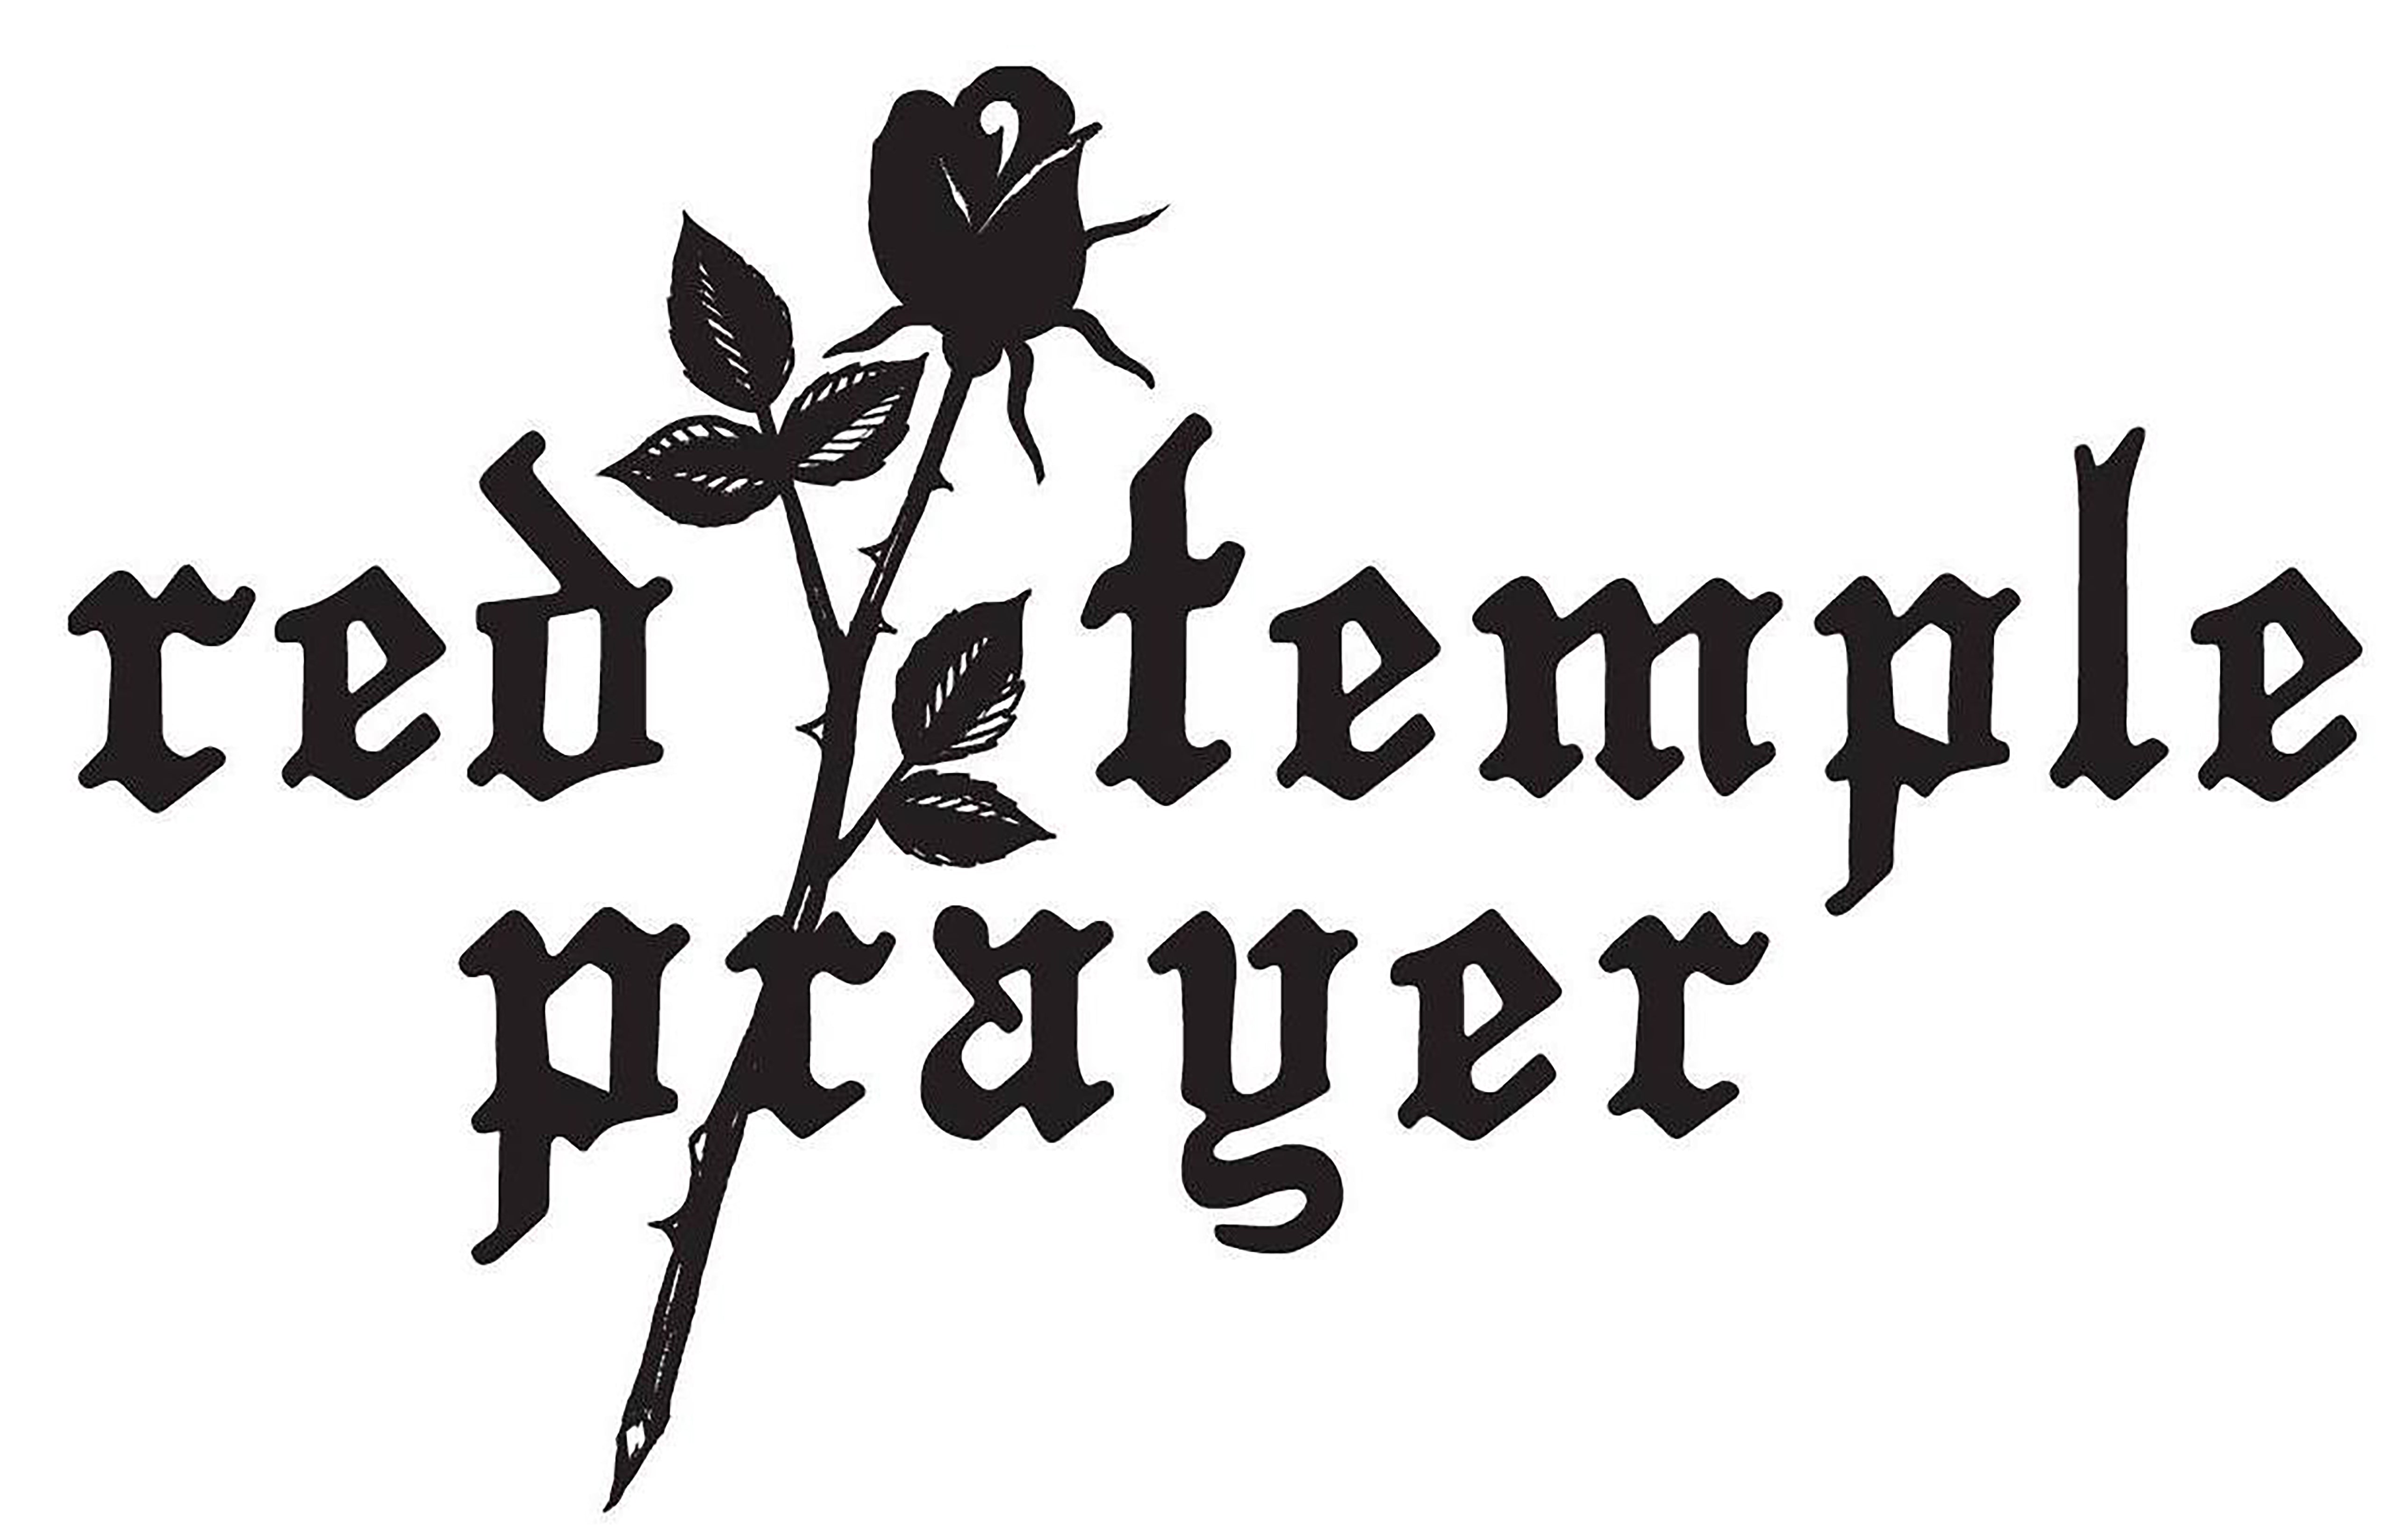 RED TEMPLE PRAYER